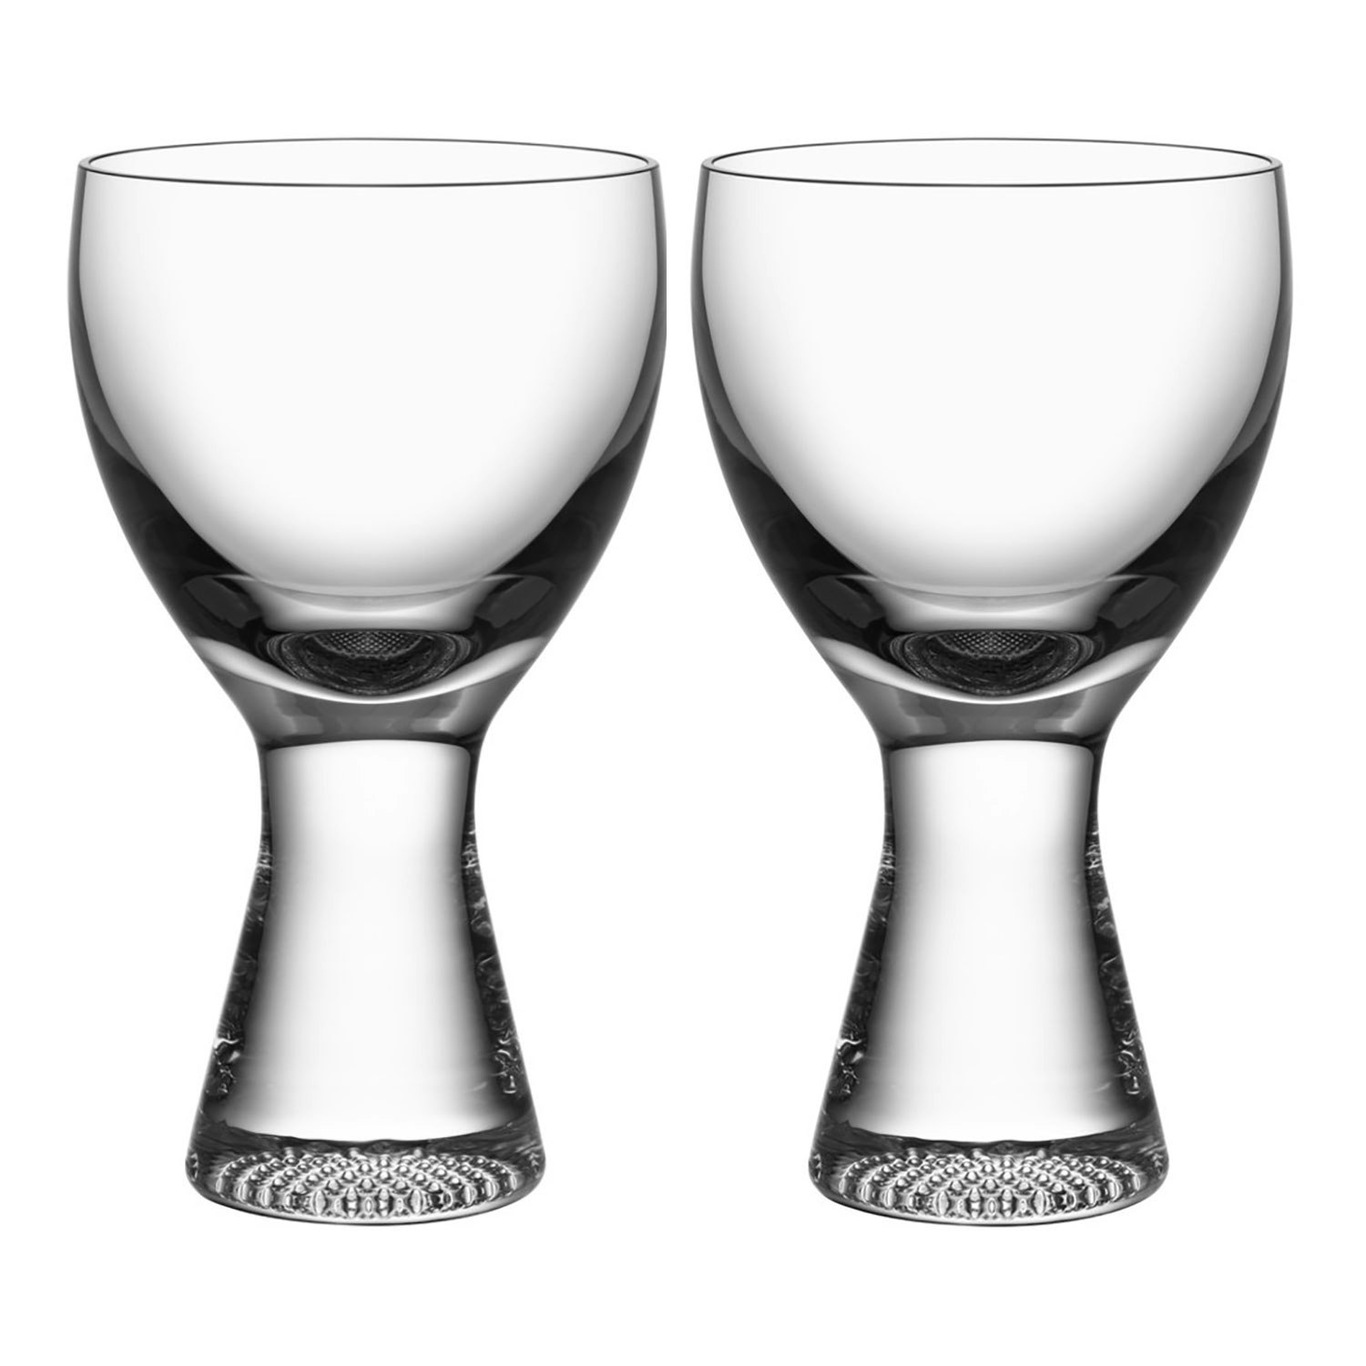 https://royaldesign.com/image/11/kosta-boda-limelight-wine-glasses-2-pack-35-cl-0?w=800&quality=80